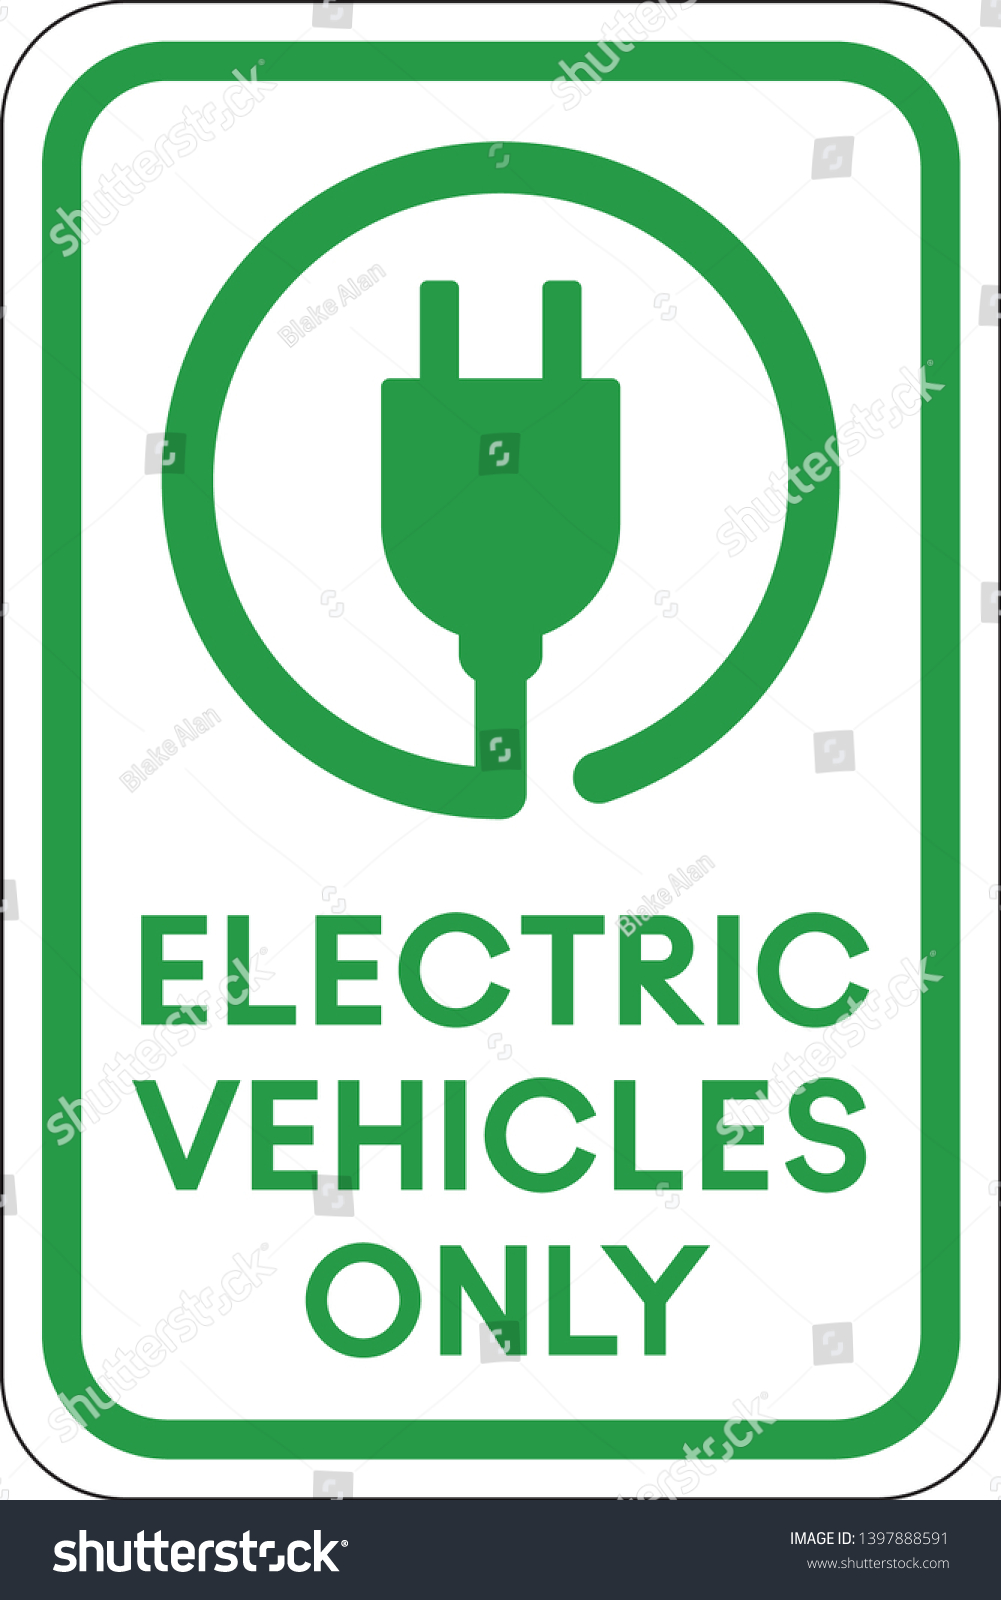 EV Electric Vehicle Parking Sign 